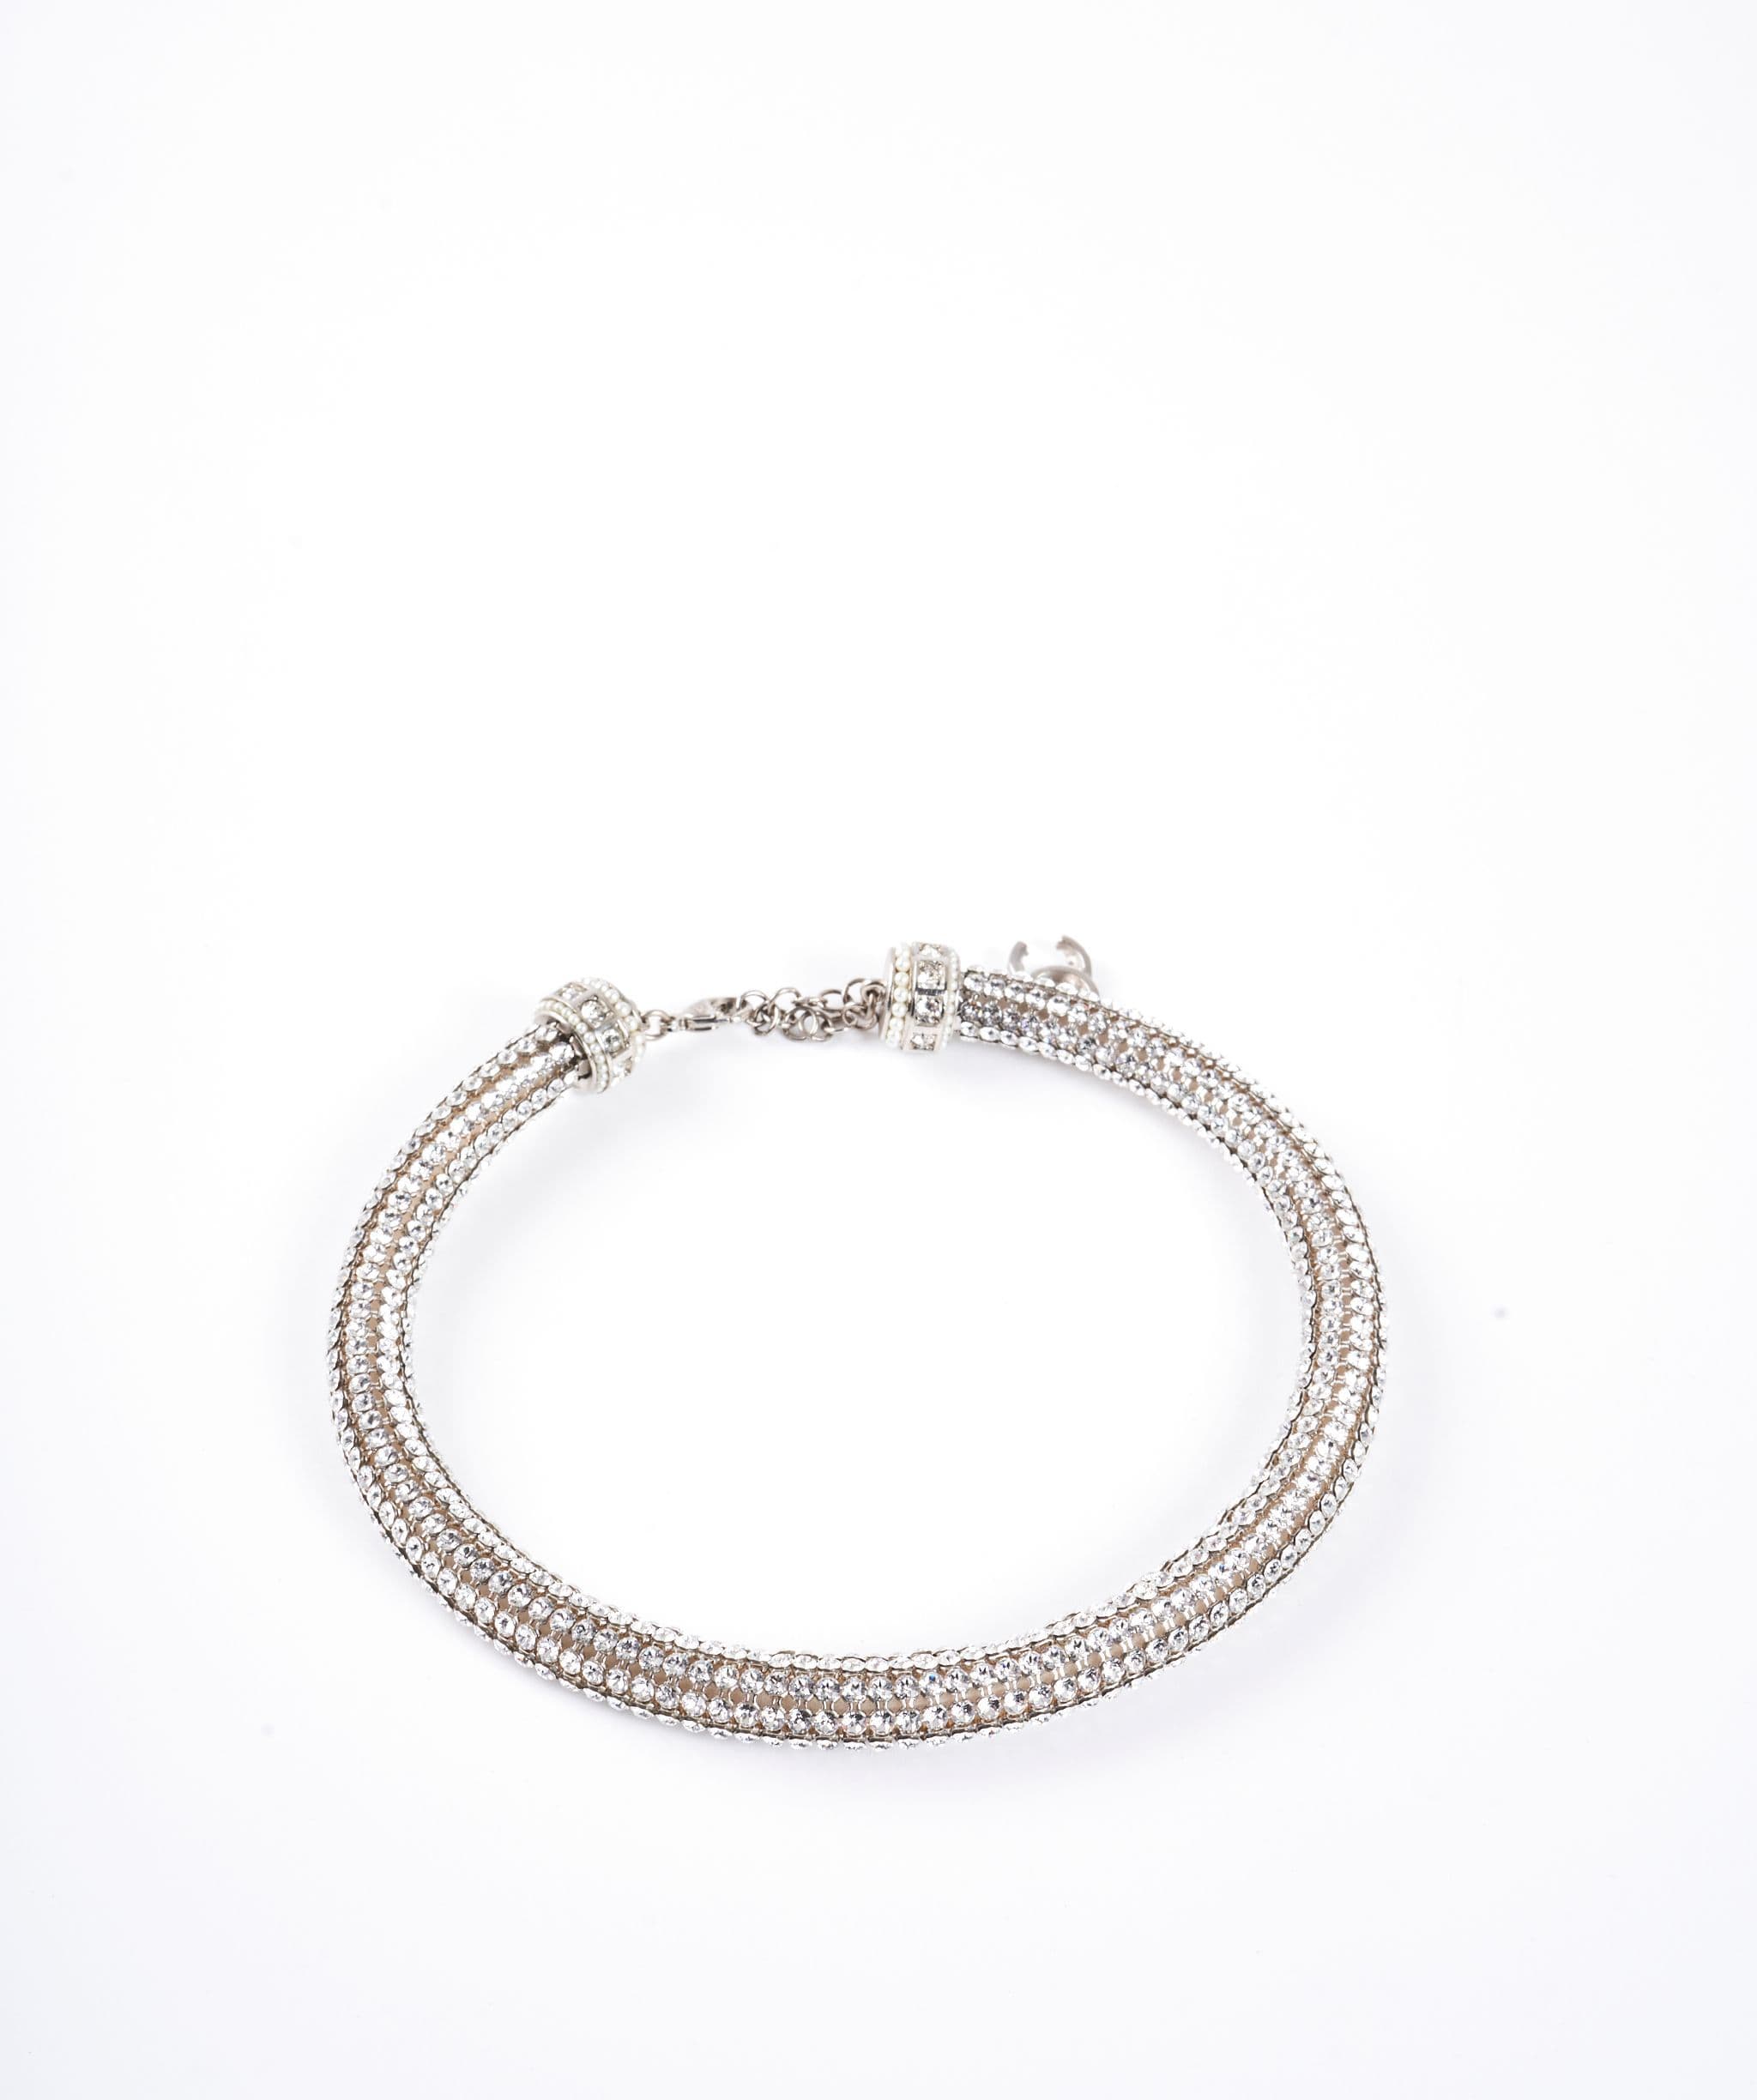 Chanel Chanel chocker necklace